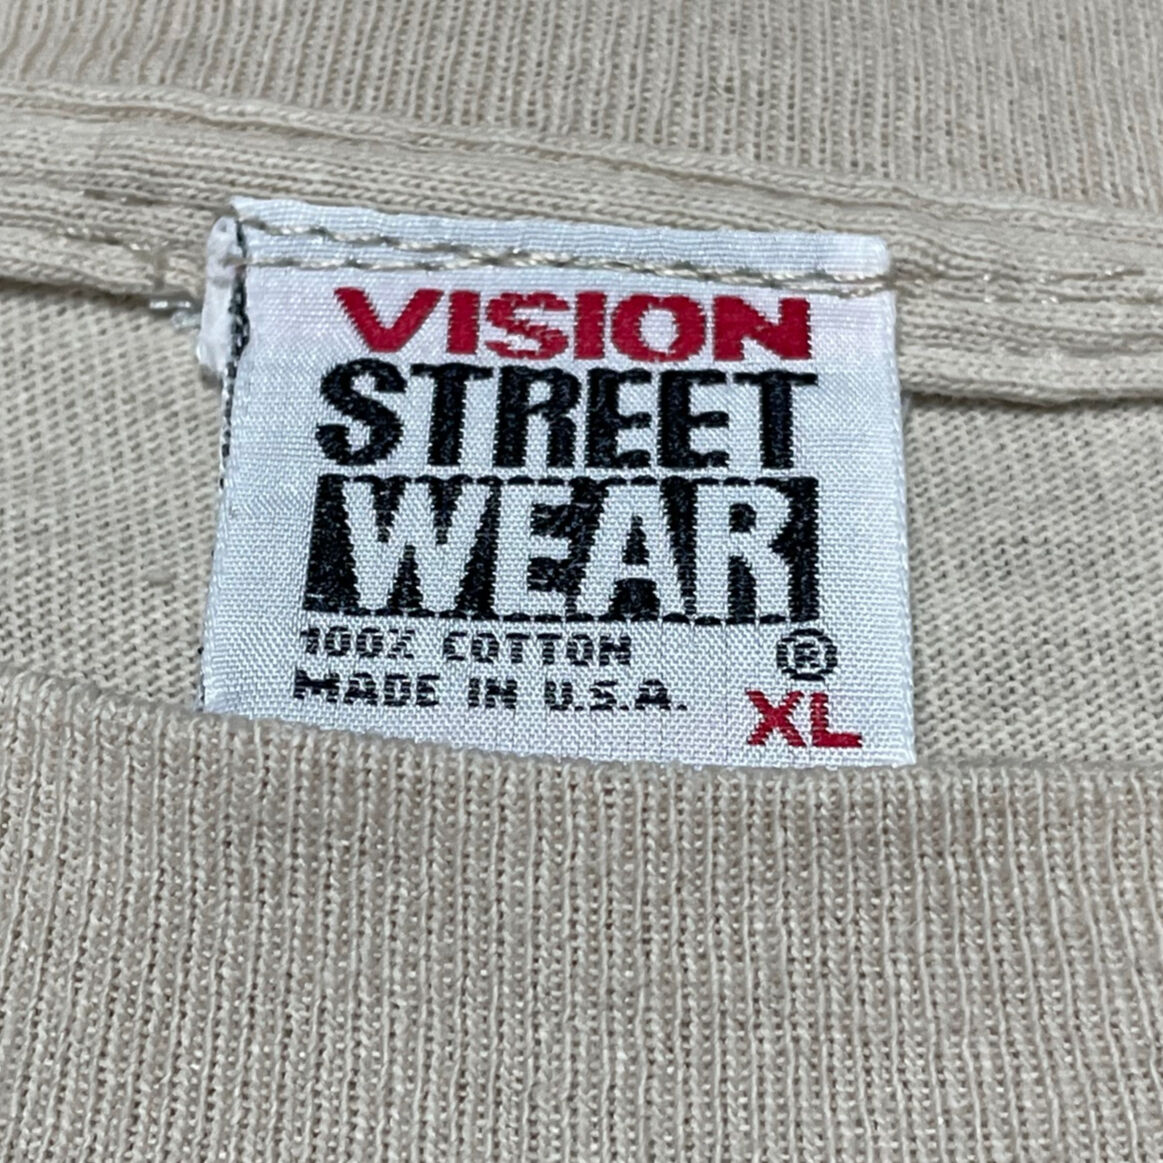 VISION STREET WEAR ハーフ　ショートパンツ　USA製